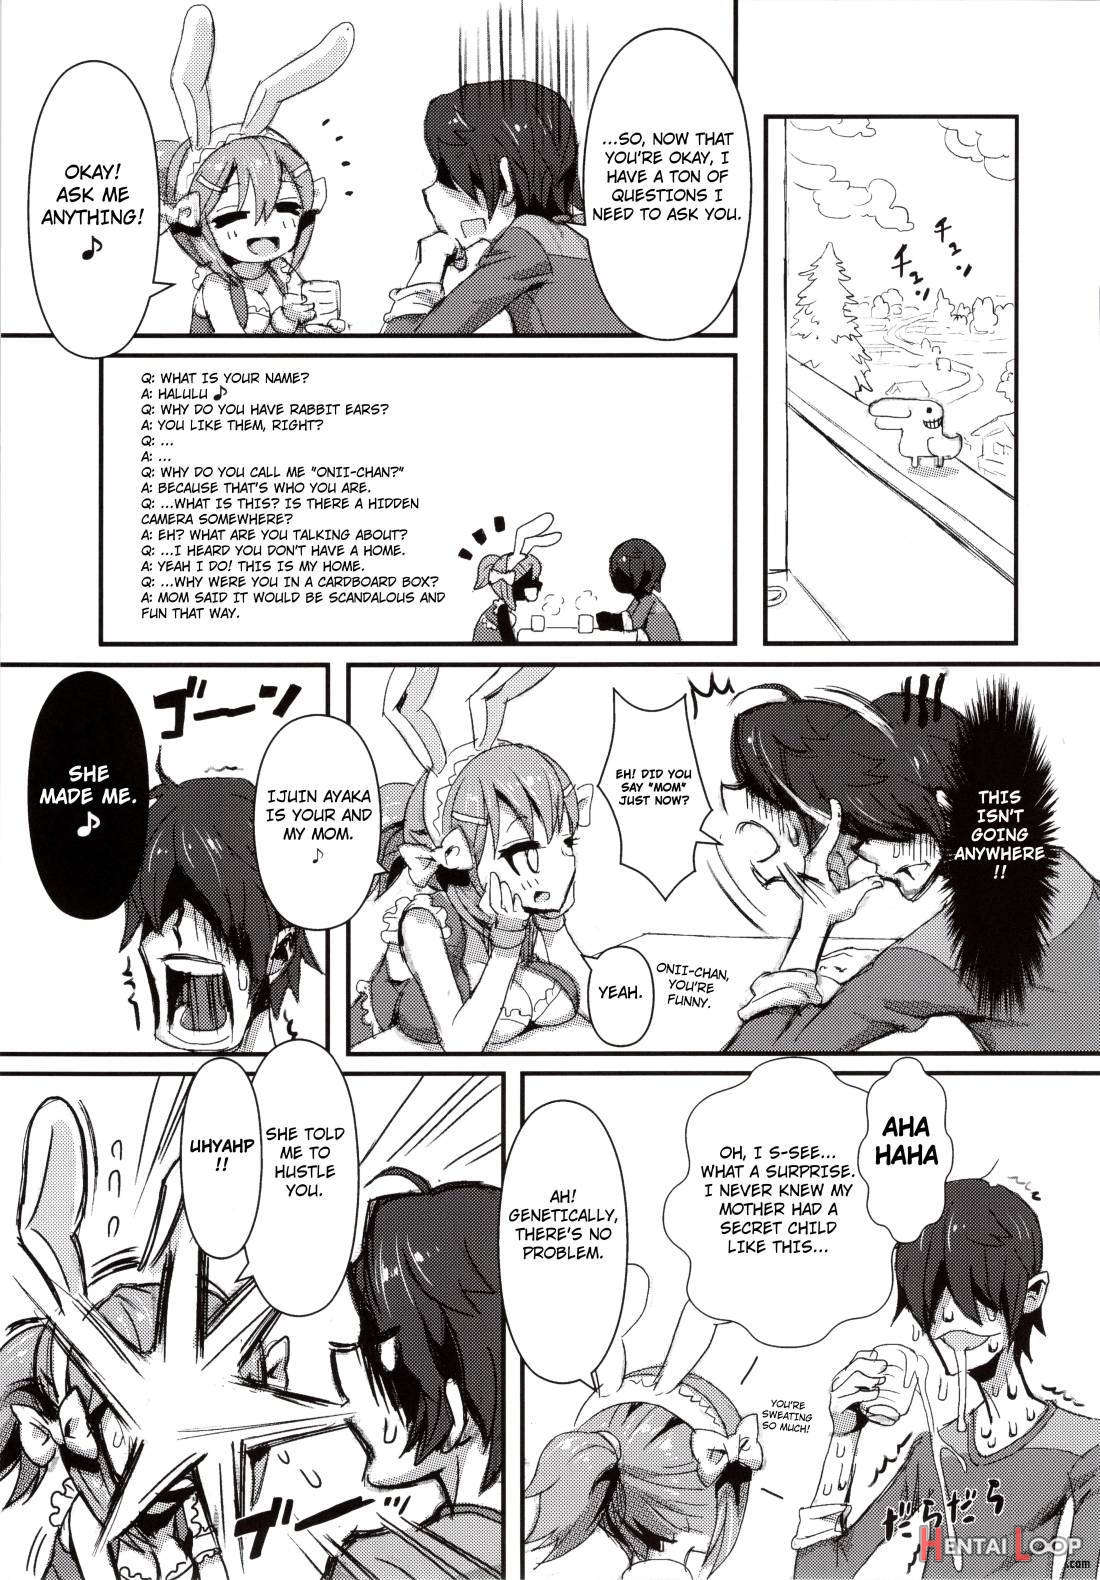 Mimipull Hachi page 9